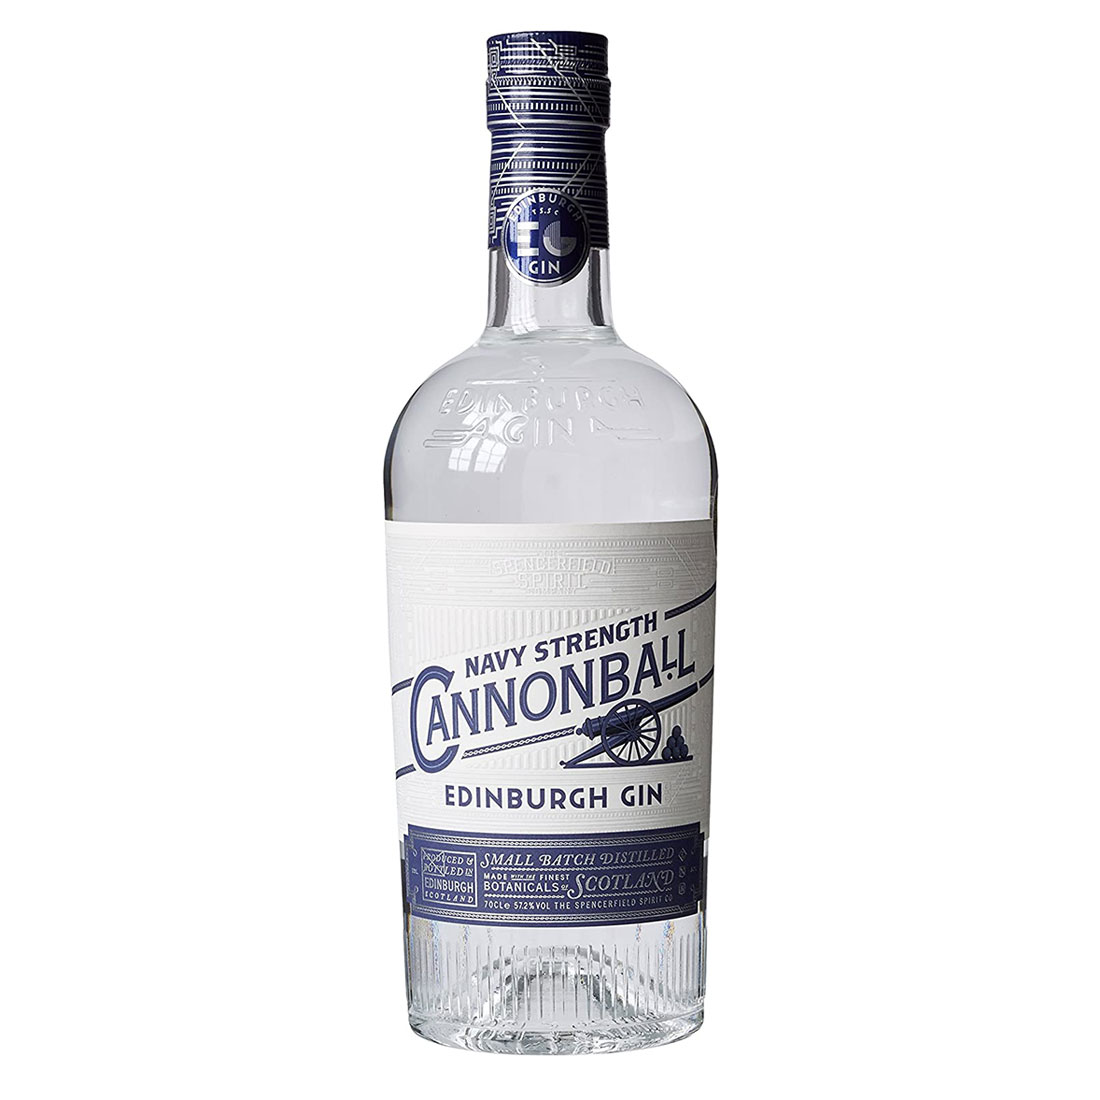 LB_Bottle-Edinburgh-Cannonball-Navy-Strength-Gin